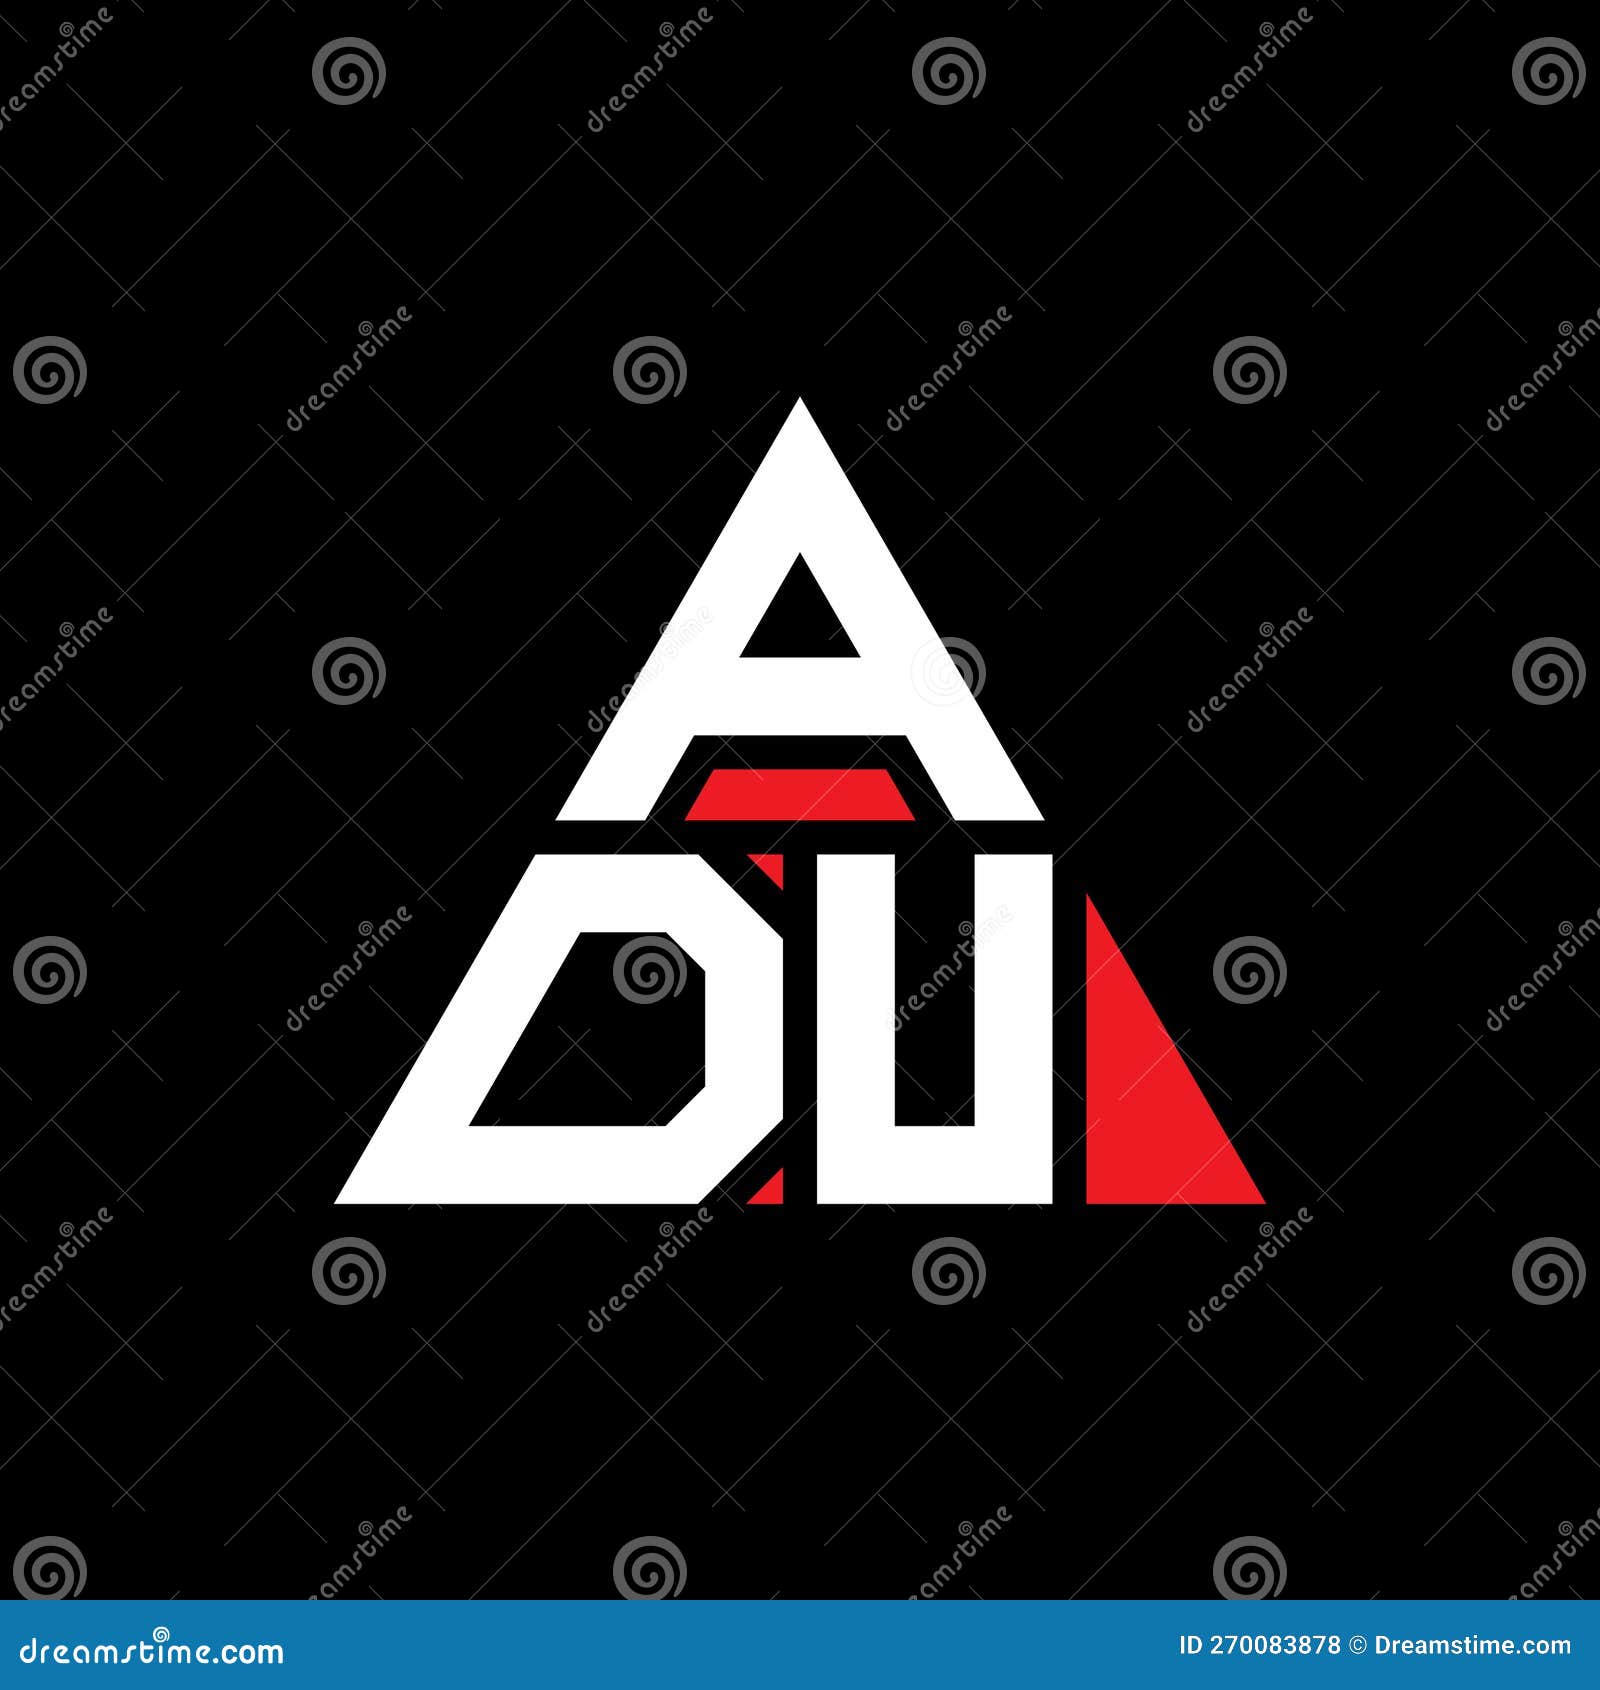 adu triangle letter logo  with triangle . adu triangle logo  monogram. adu triangle  logo template with red